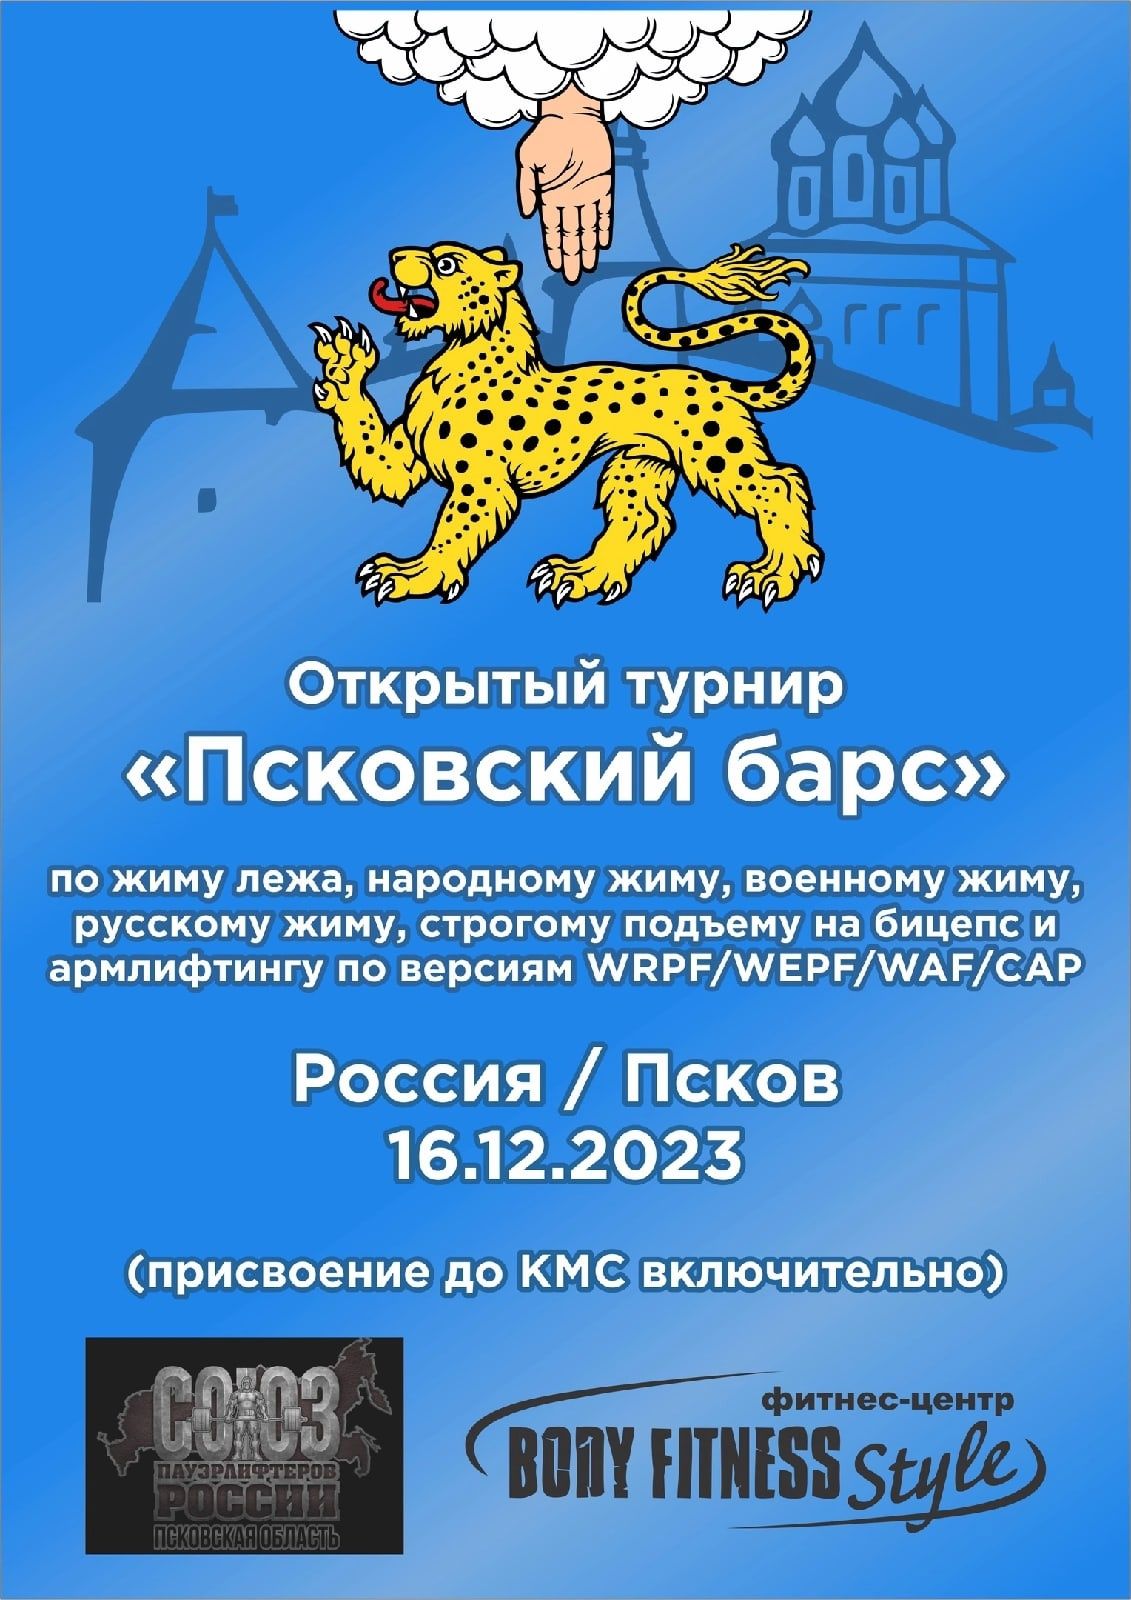 Турнир «Псковский барс» WRPF/WEPF/WAF/САР, Псков, 16.12.2023 